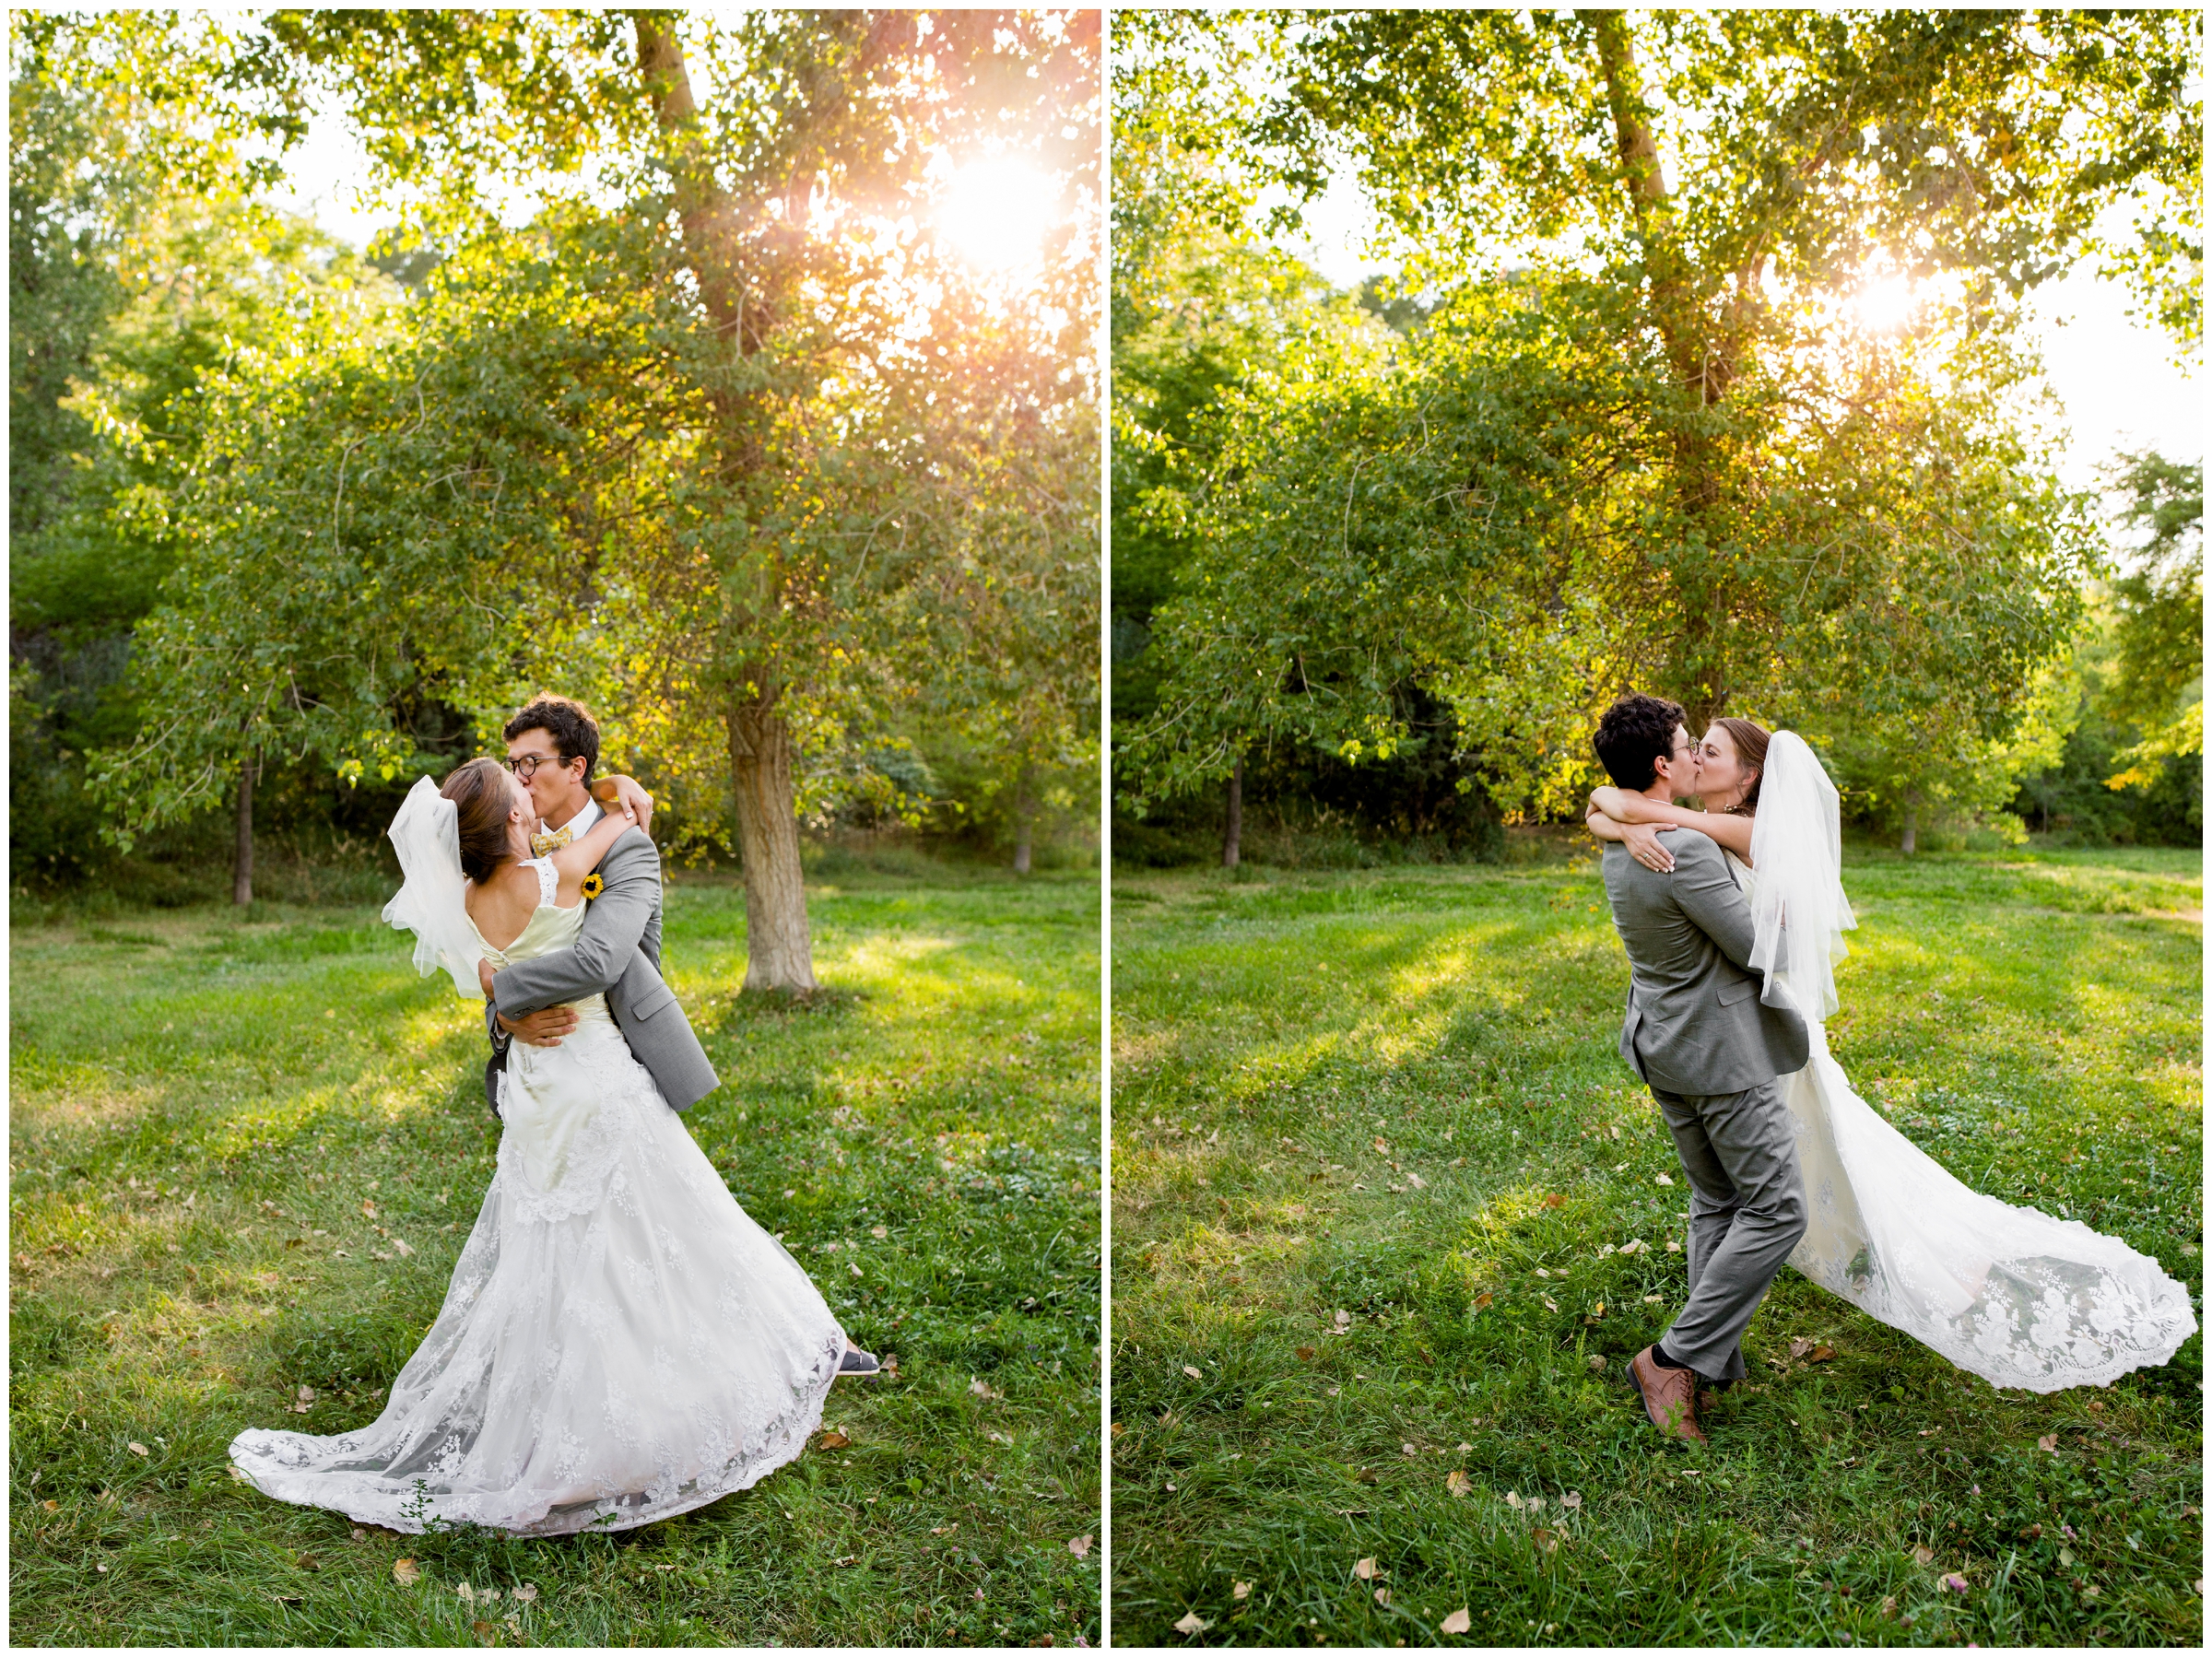 groom spinning bride in Golden park during Colorado wedding pictures 